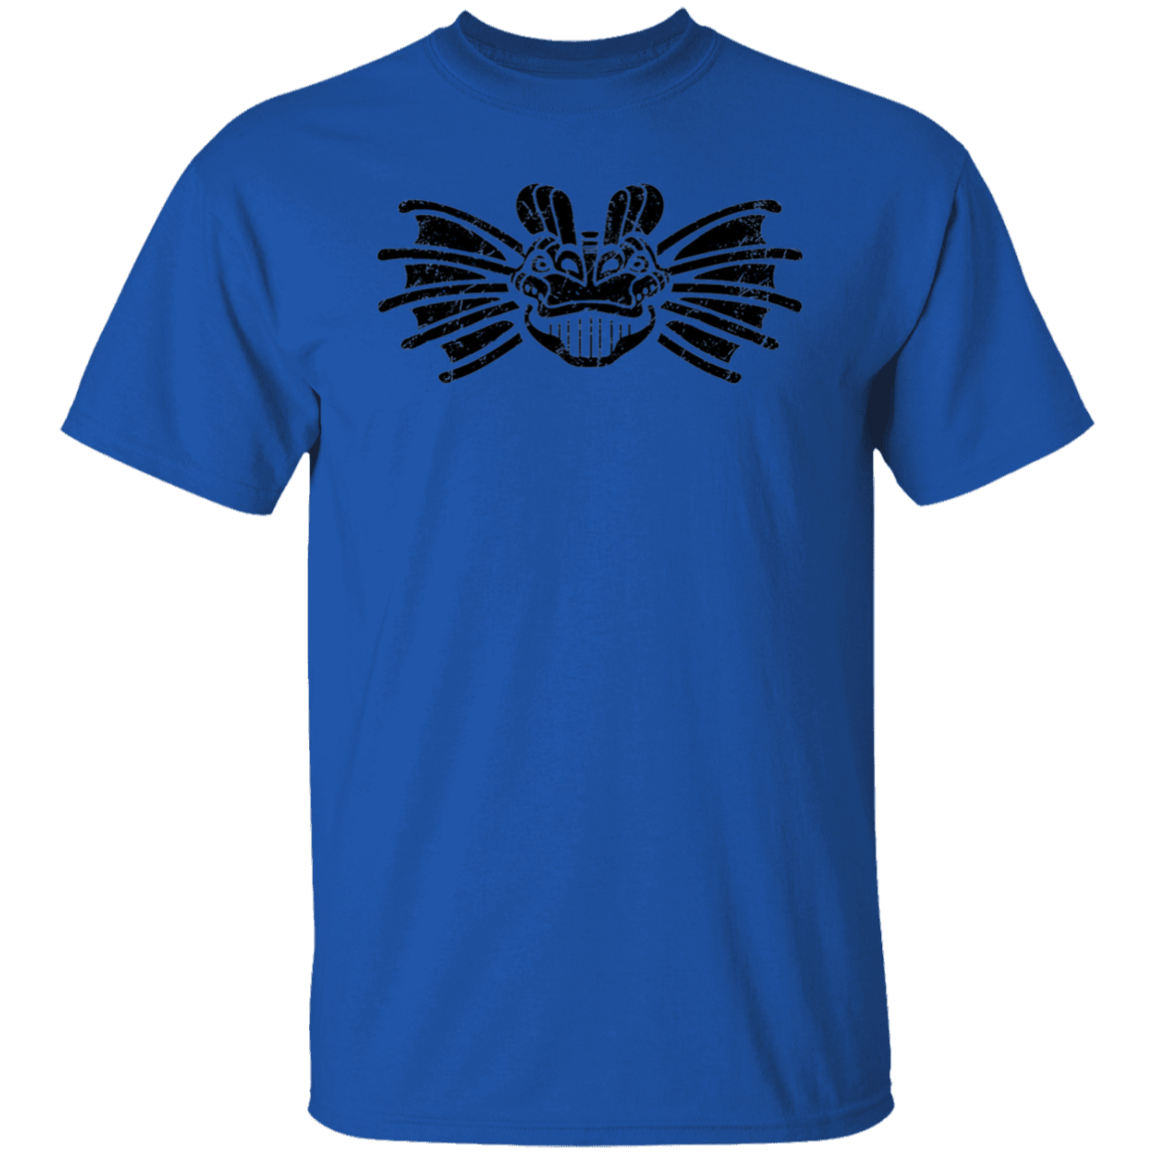 Black Distressed Emblem T-Shirt for Kids (Dilophosaurus/Frill)